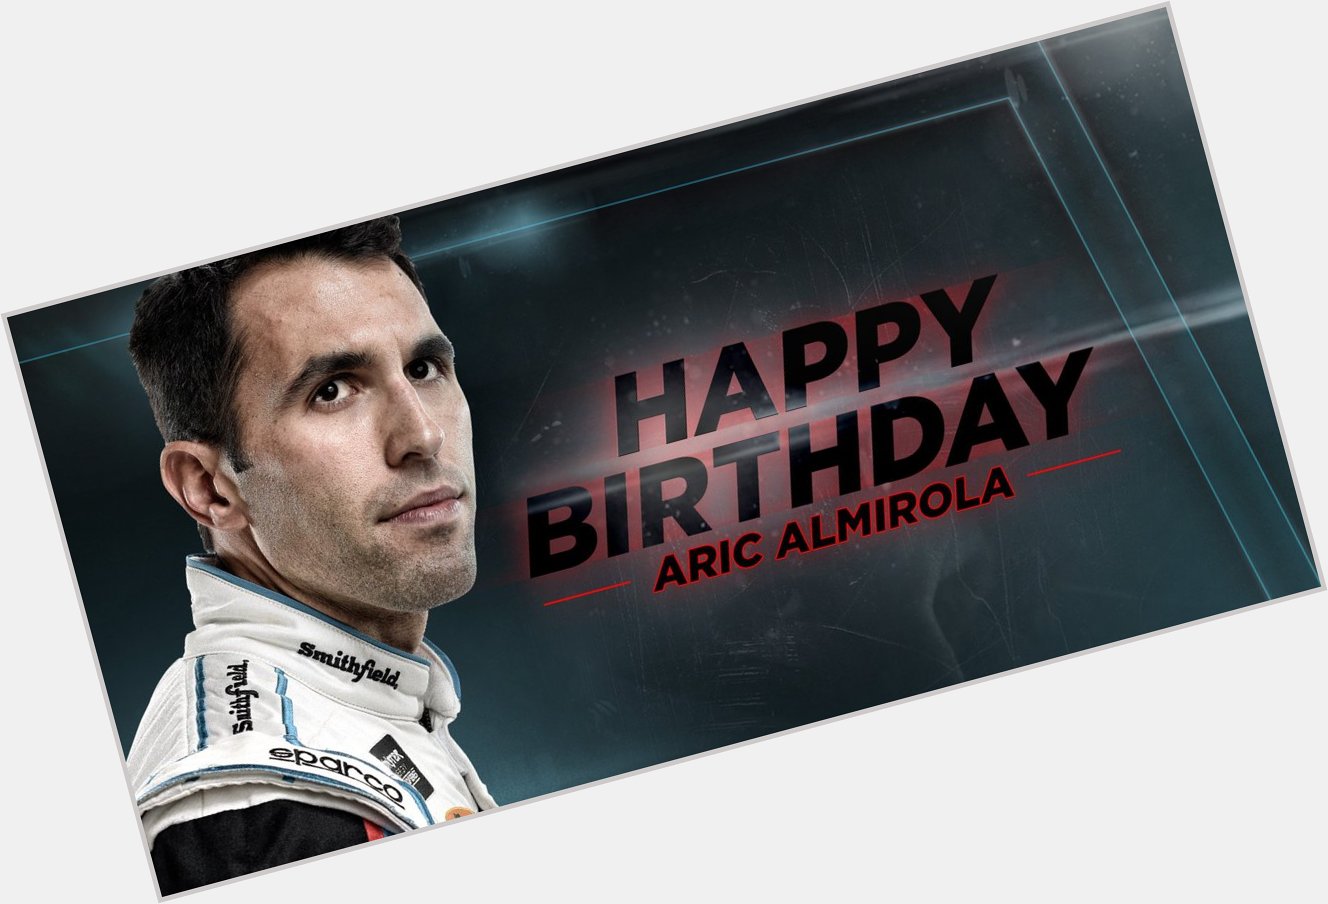 Remessage to help us wish aric_almirola Happy Birthday! 